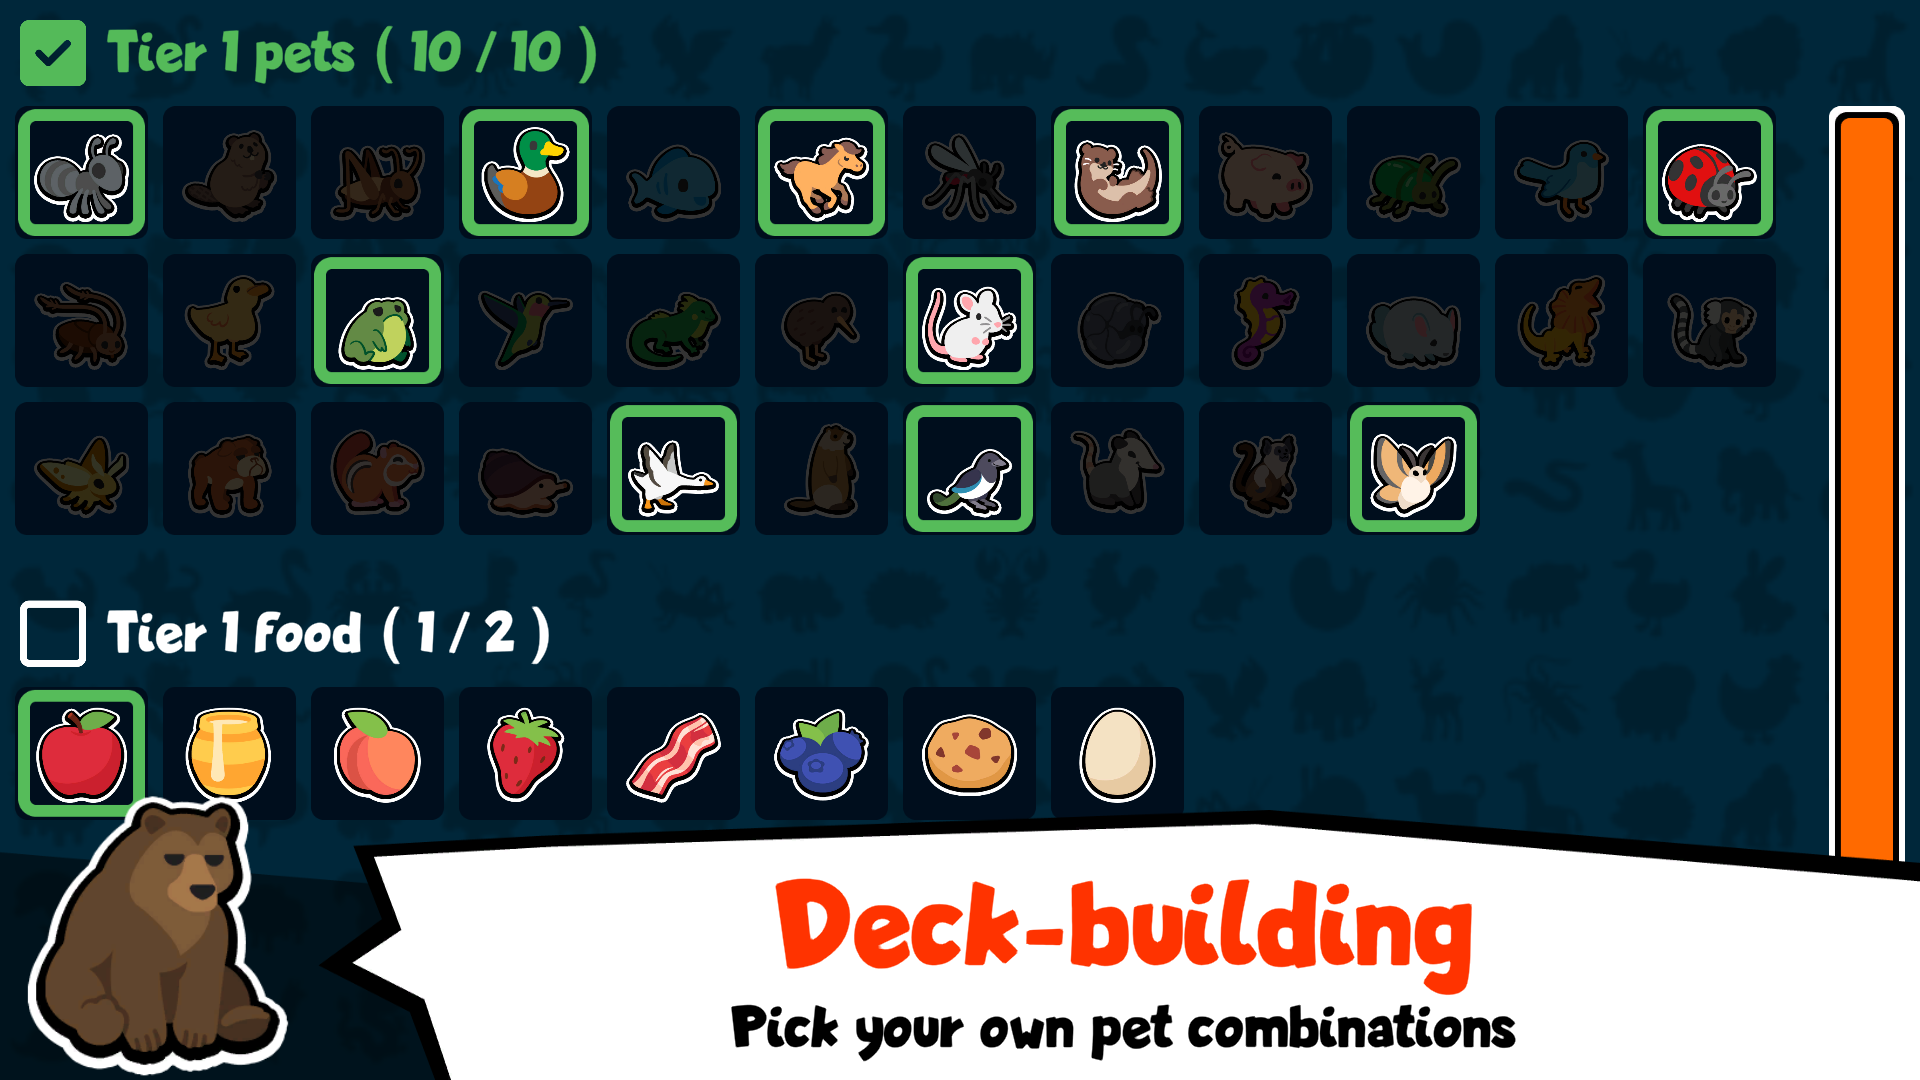 Deck-building - Pick your own pet combinations